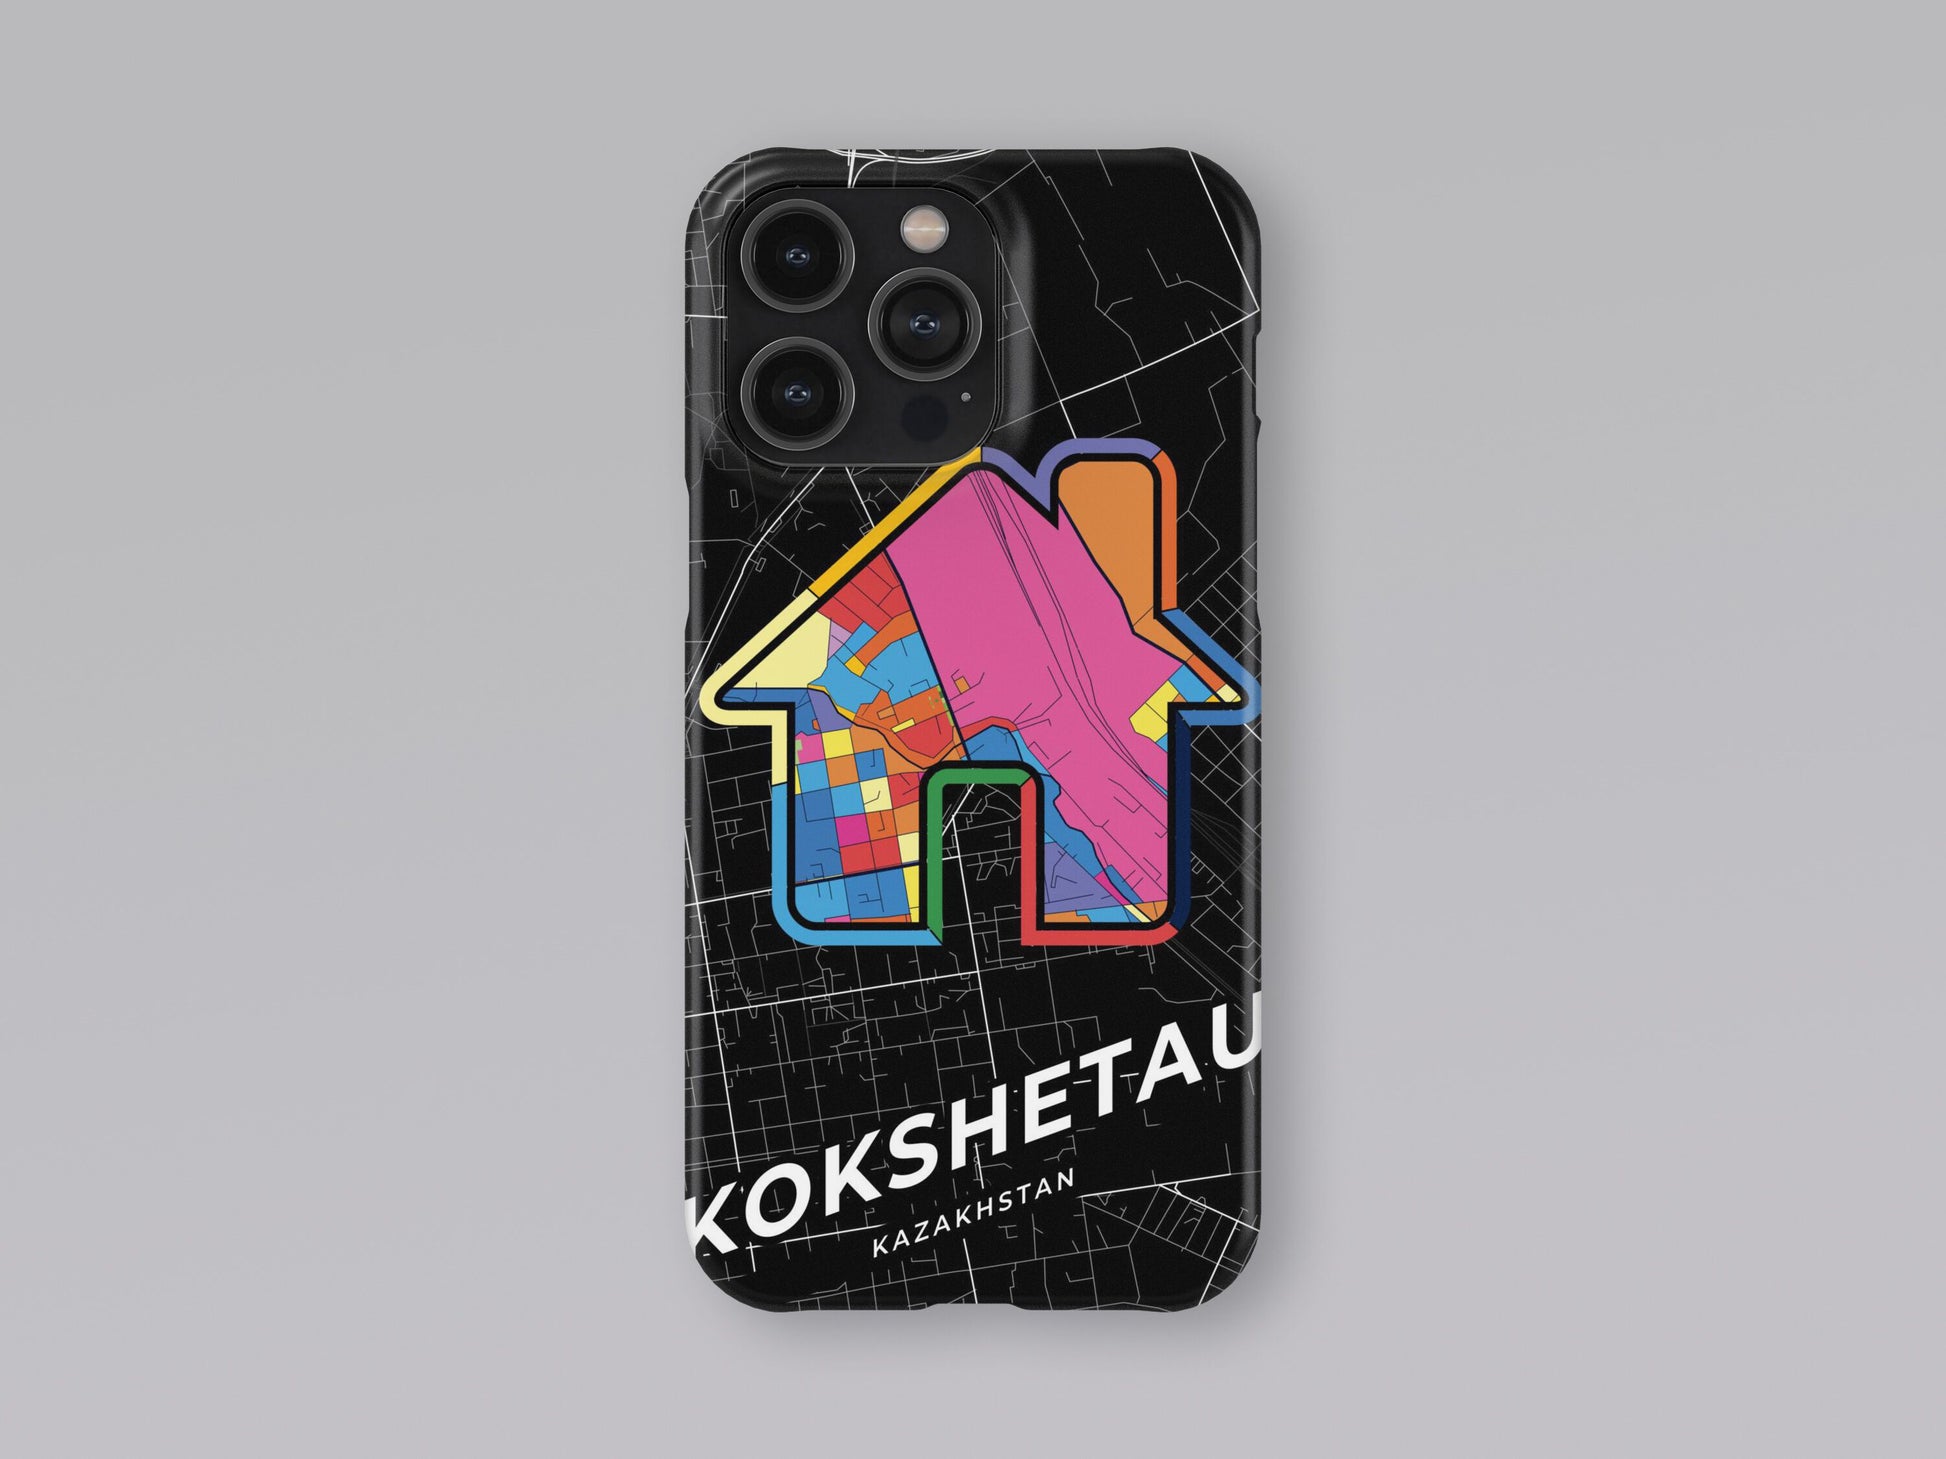 Kokshetau Kazakhstan slim phone case with colorful icon. Birthday, wedding or housewarming gift. Couple match cases. 3